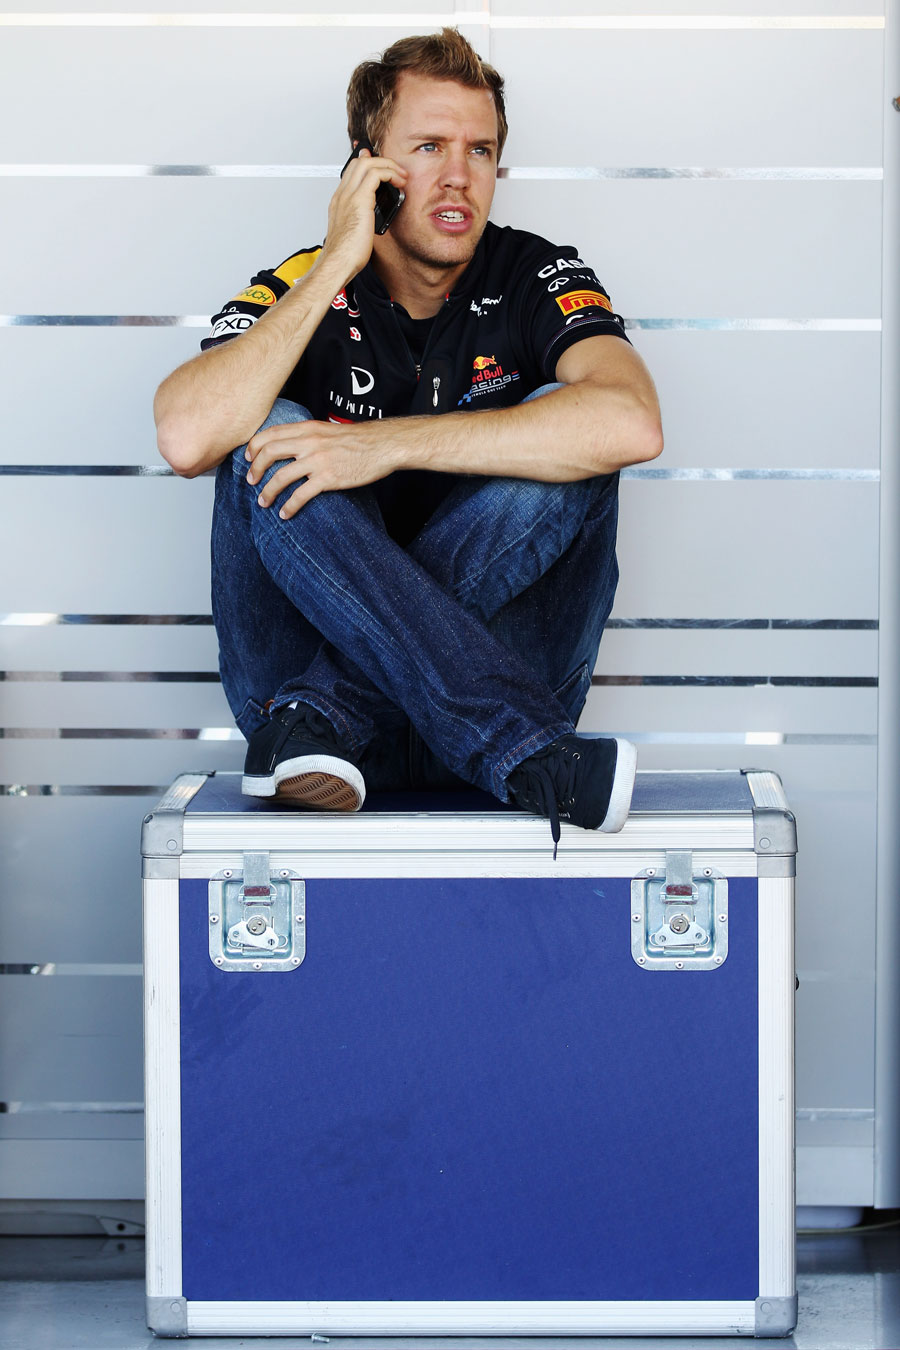 Sebastian Vettel makes a phone call in the paddock